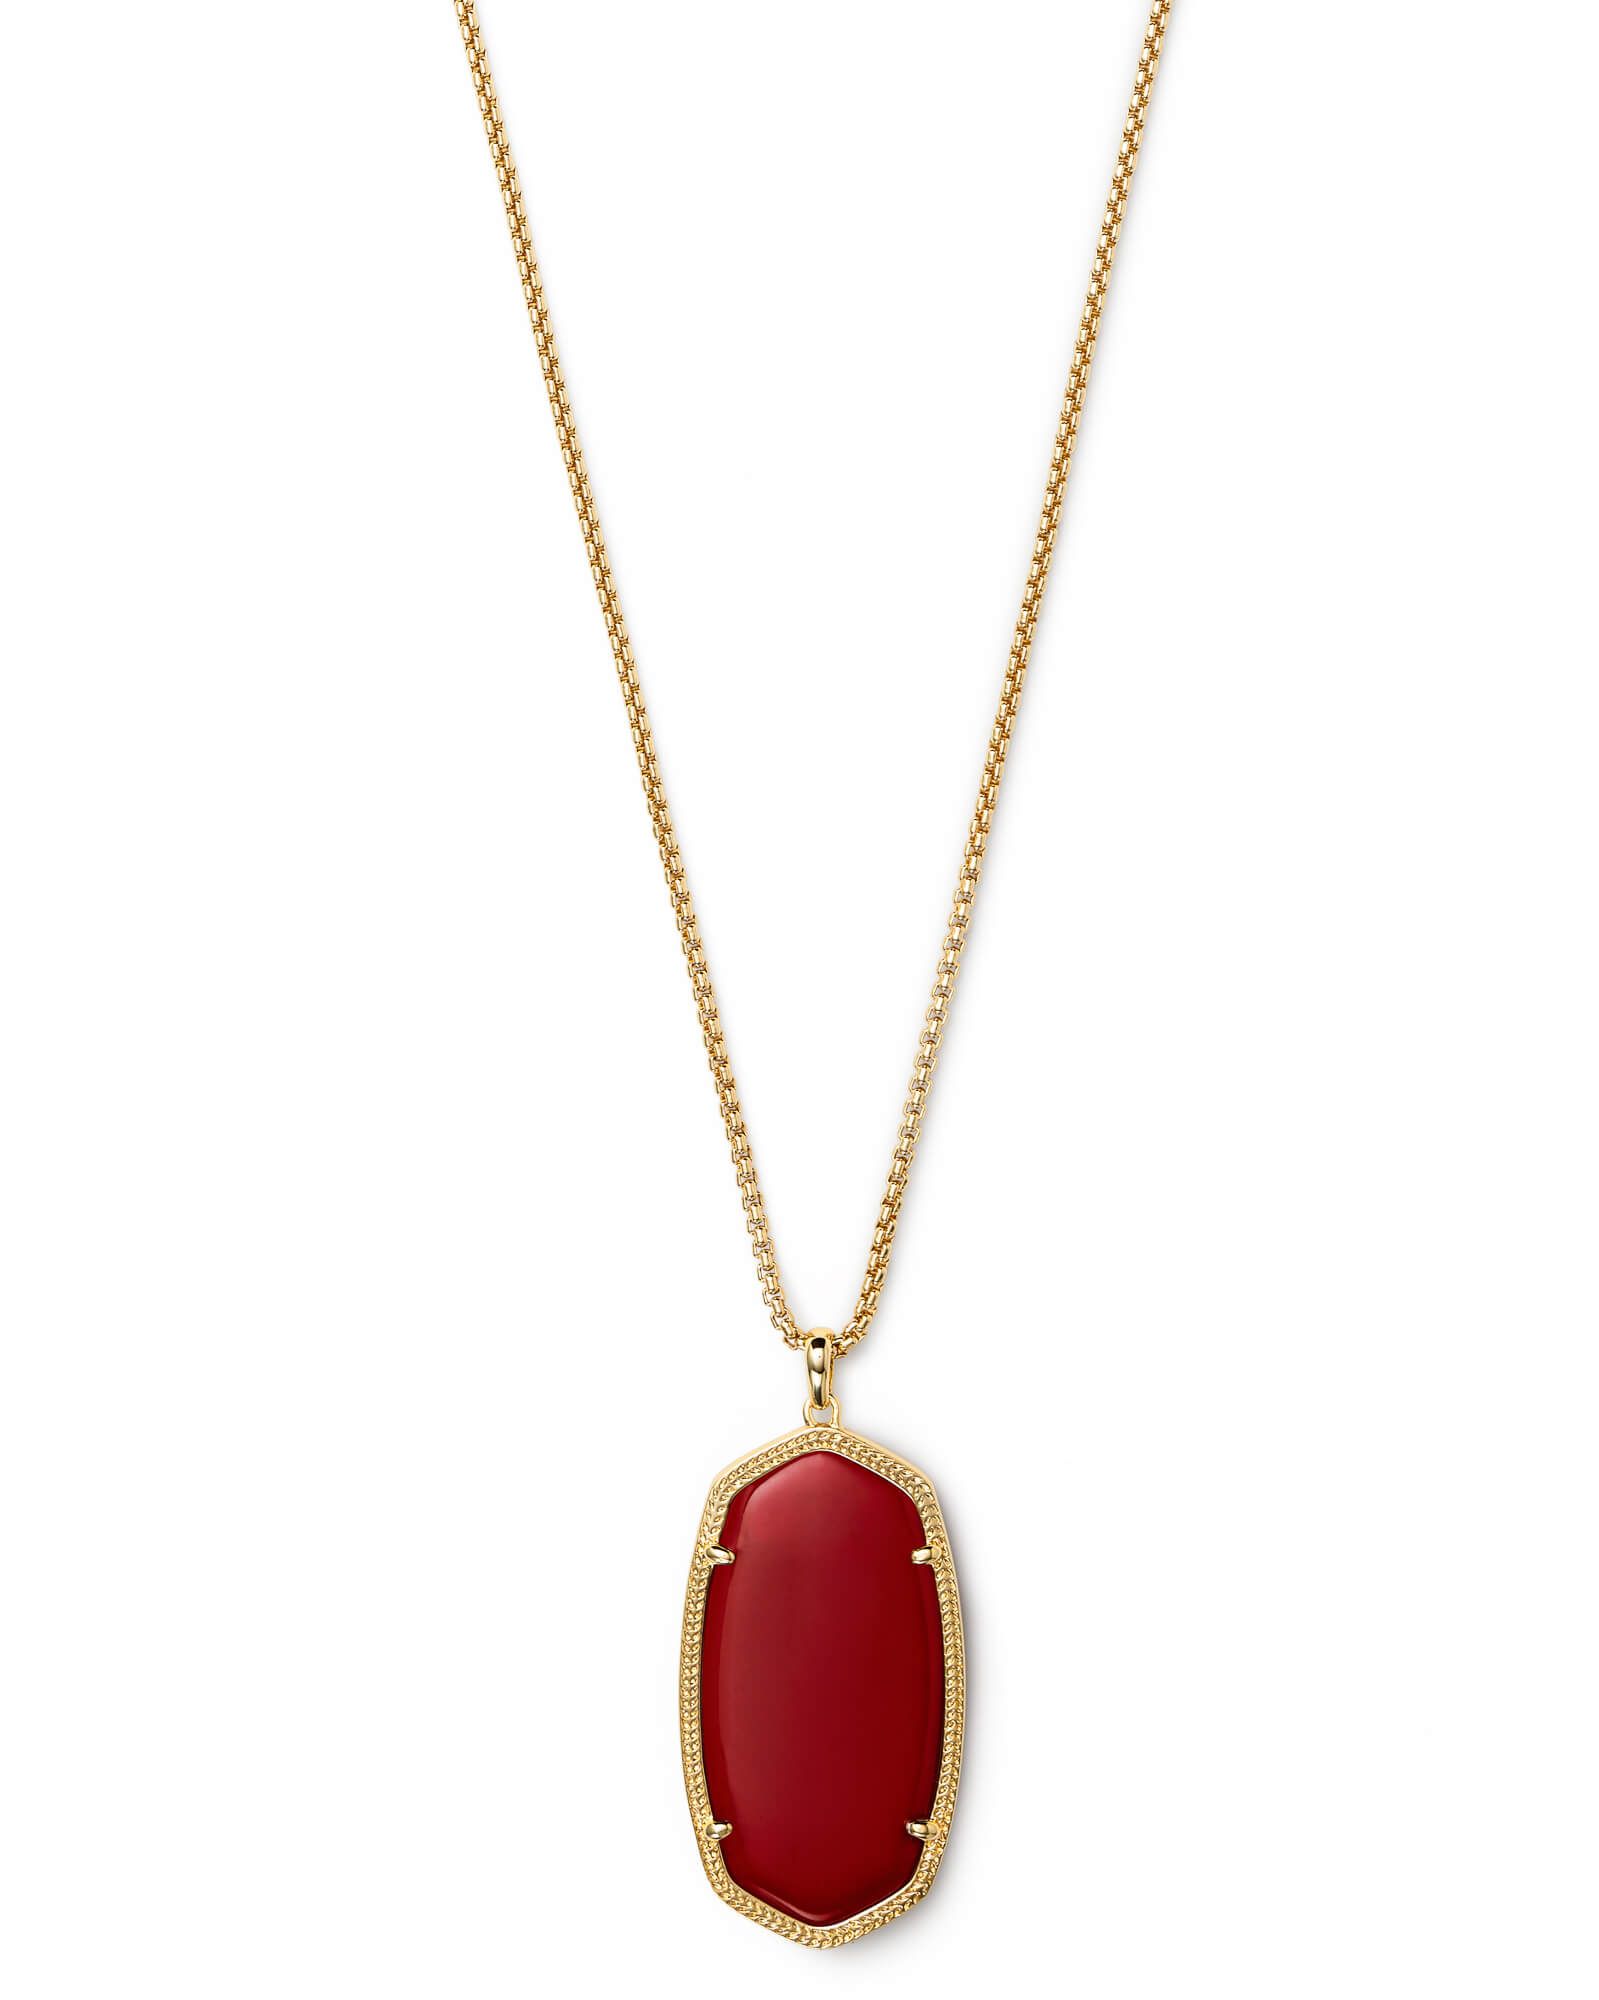 Reid Gold Long Pendant Necklace in Dark Red | Kendra Scott